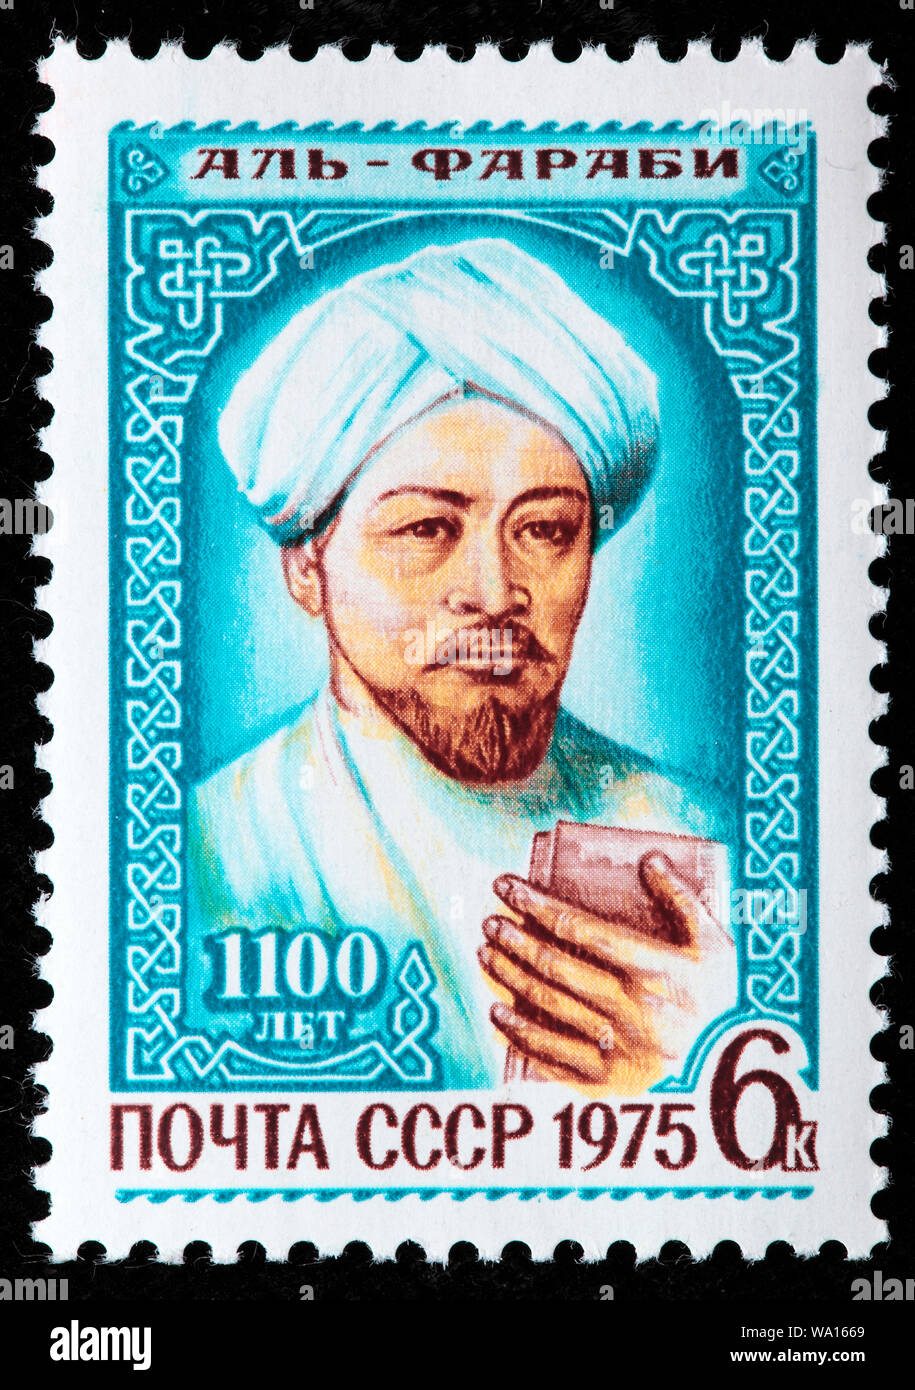 Alpharabius (al-farabi, 872-950), islamische Philosoph, Jurist, Briefmarke, Russland, UDSSR, 1975 Stockfoto